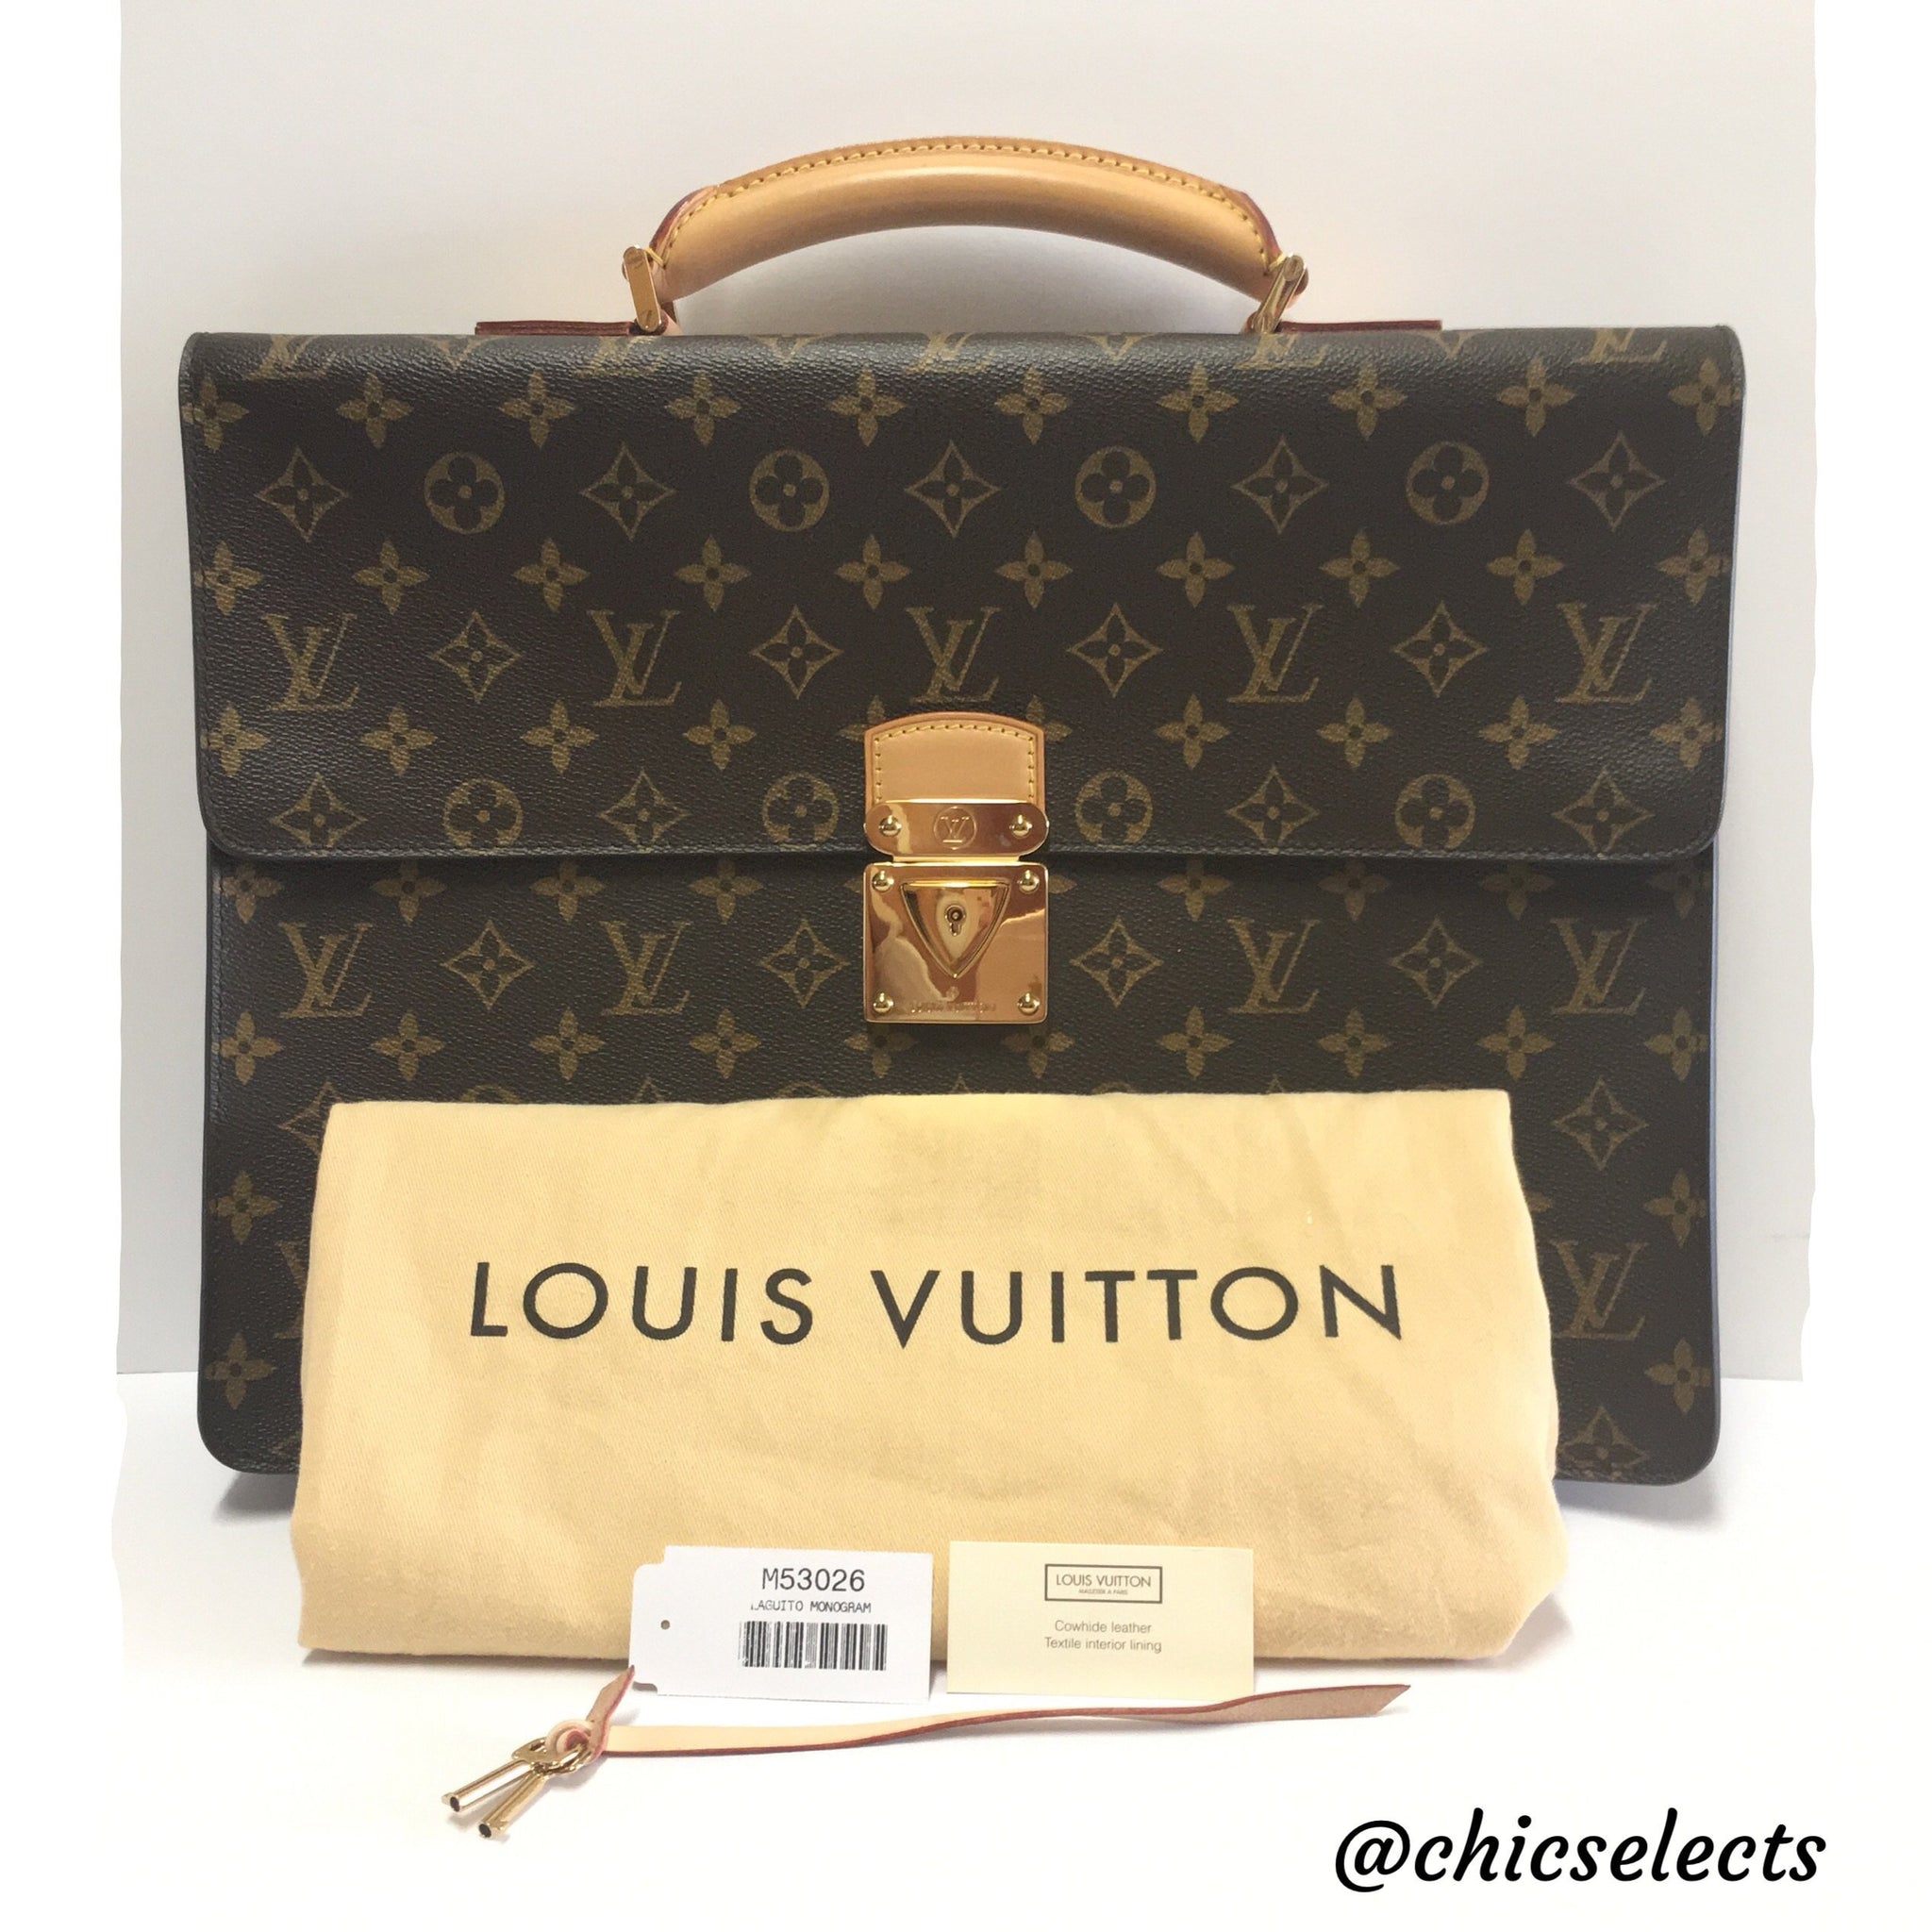 Louis Vuitton come porta guanti